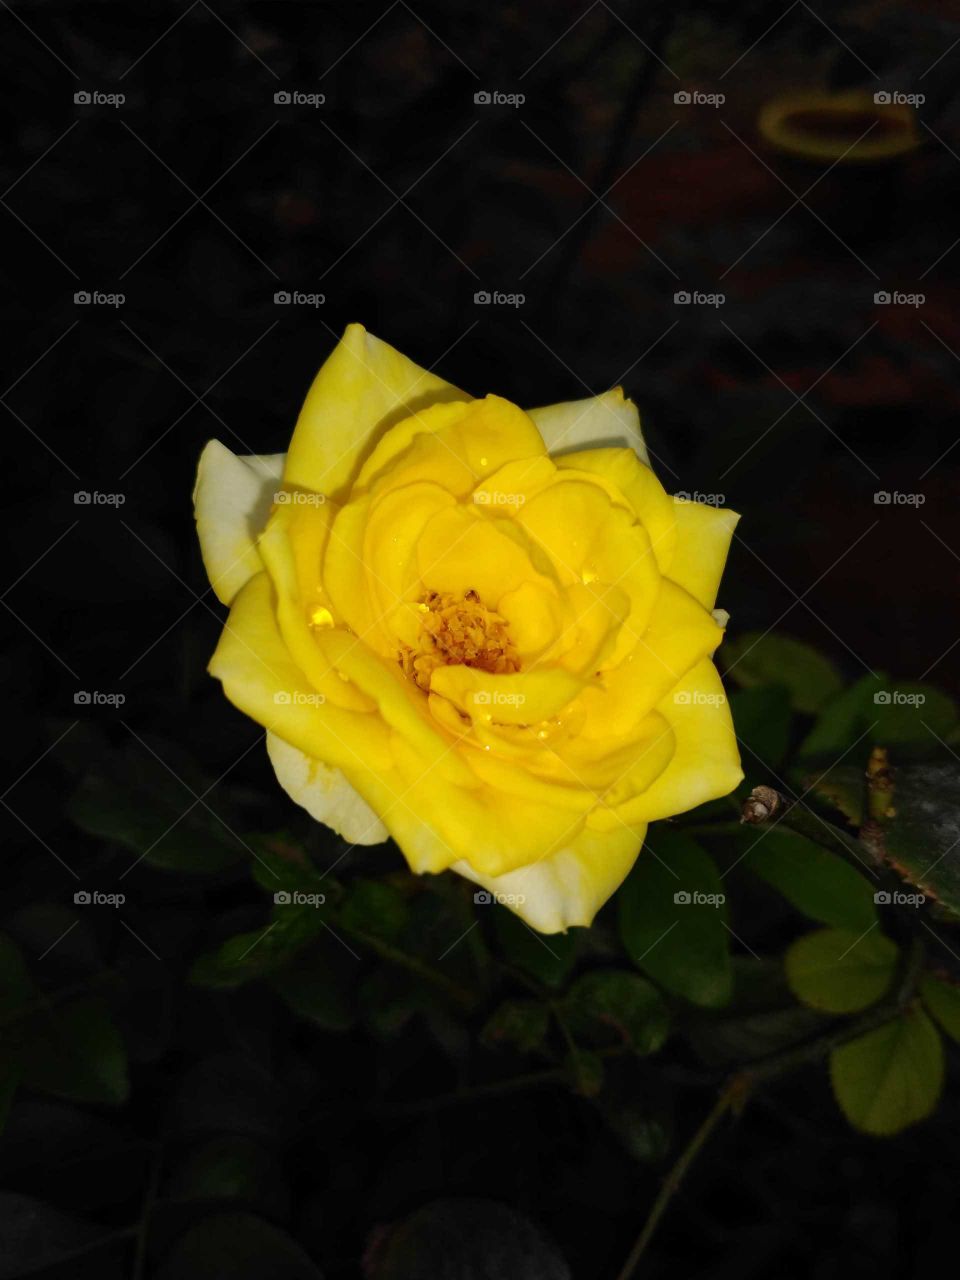 beautiful yellow rose flower in my garden